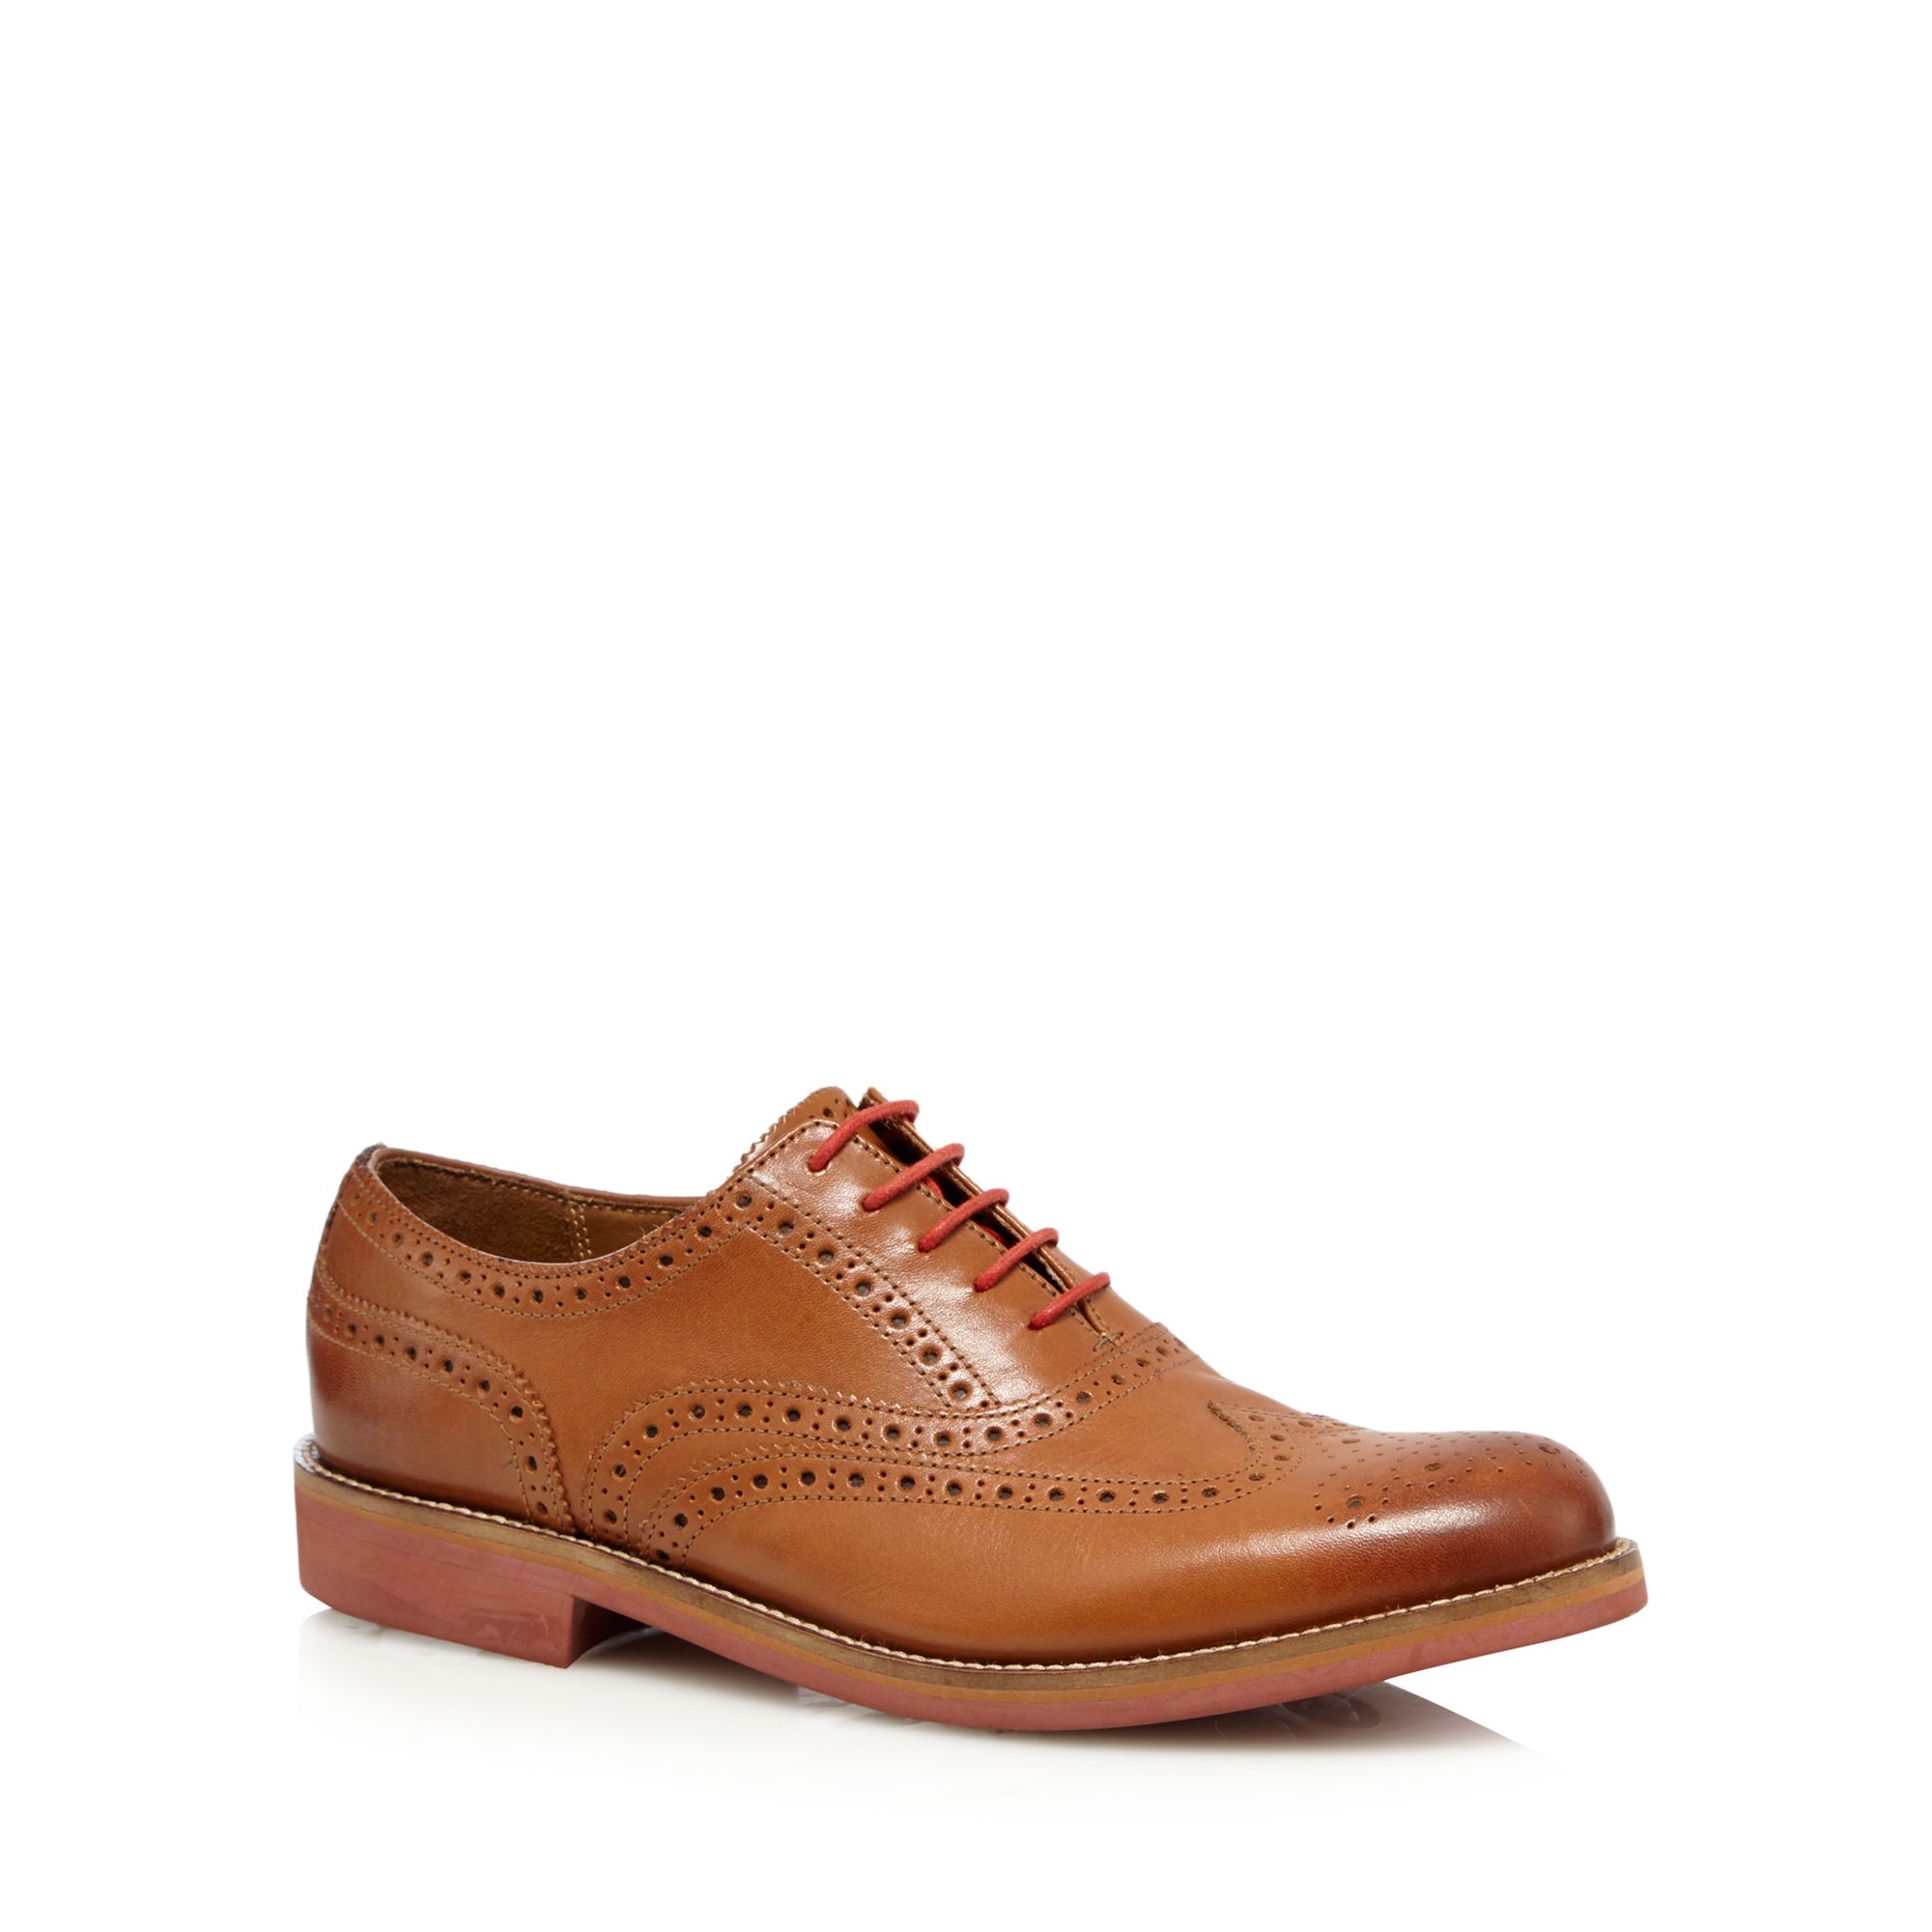 Rjr.John Rocha Mens Designer Light Brown Leather Brogue Shoes From ...